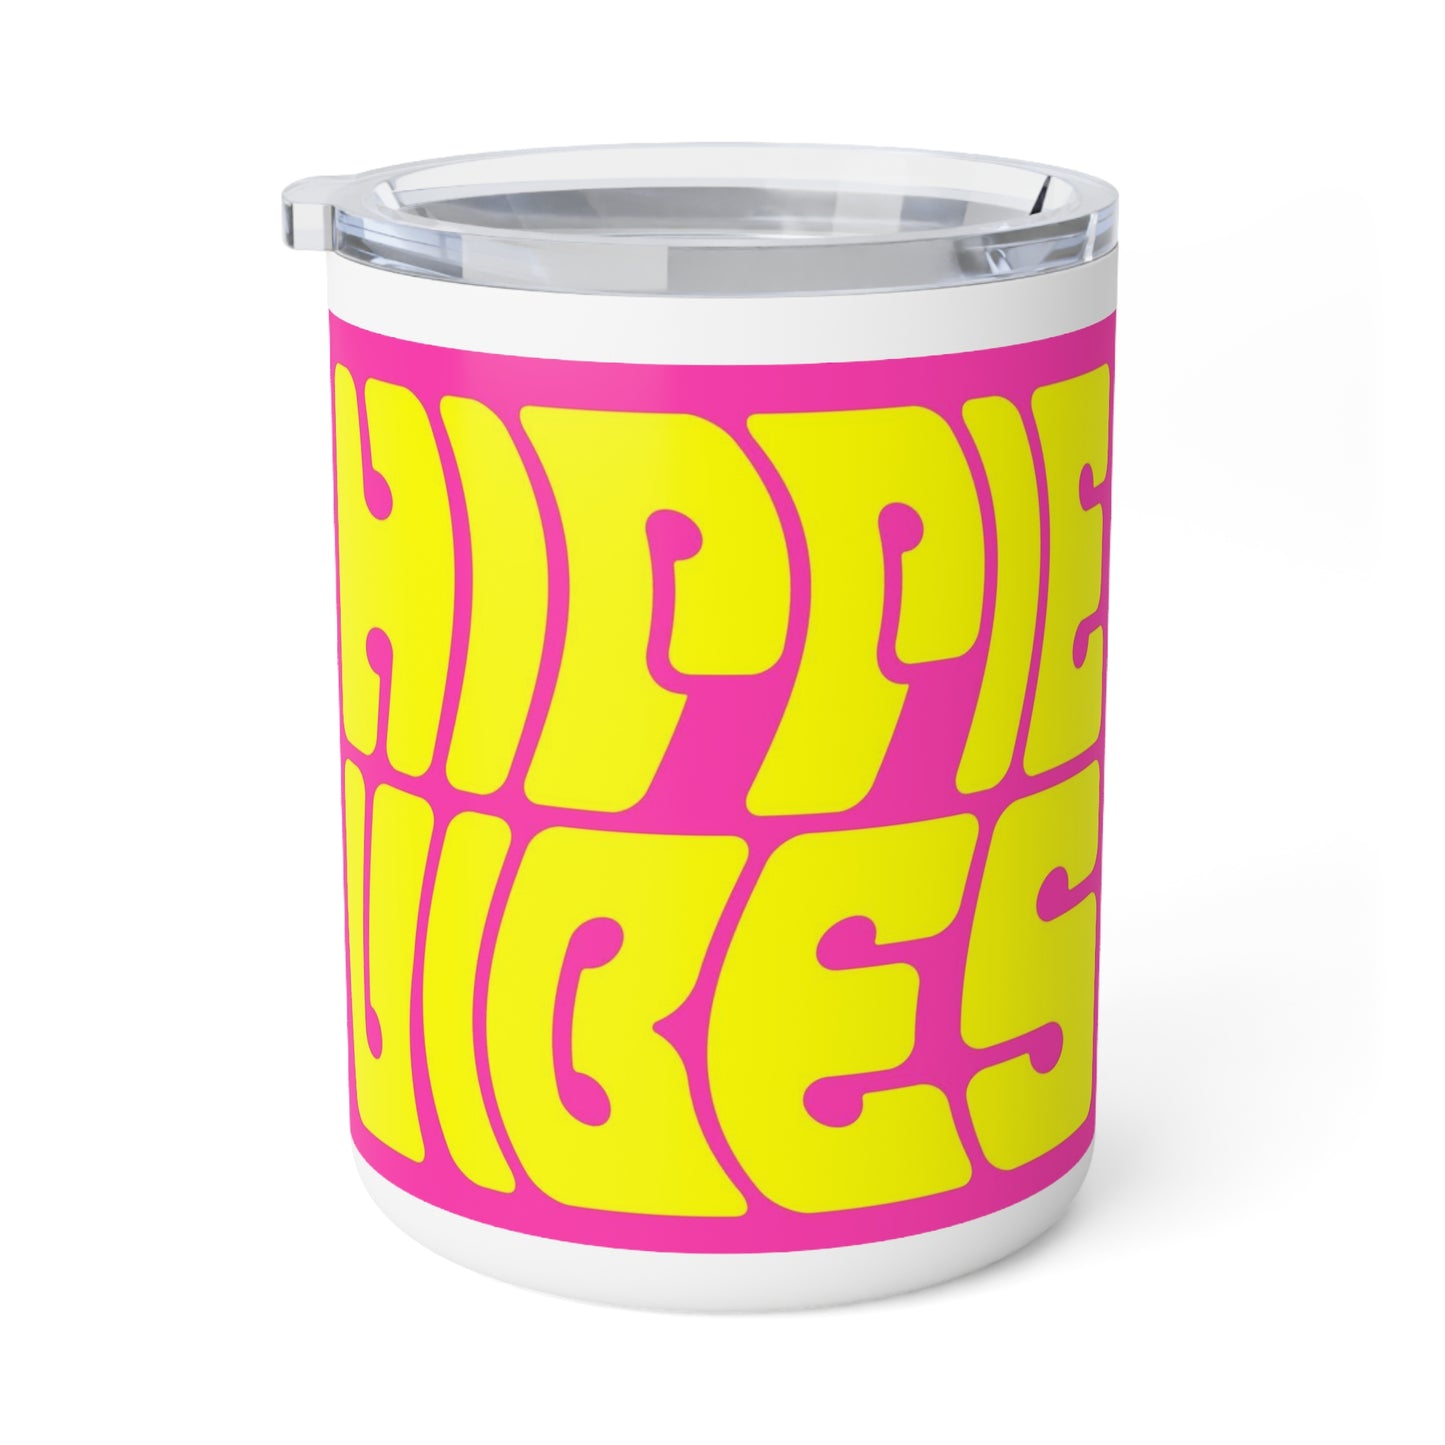 Hippie Vibes | Insulated Coffee Mug, 10oz